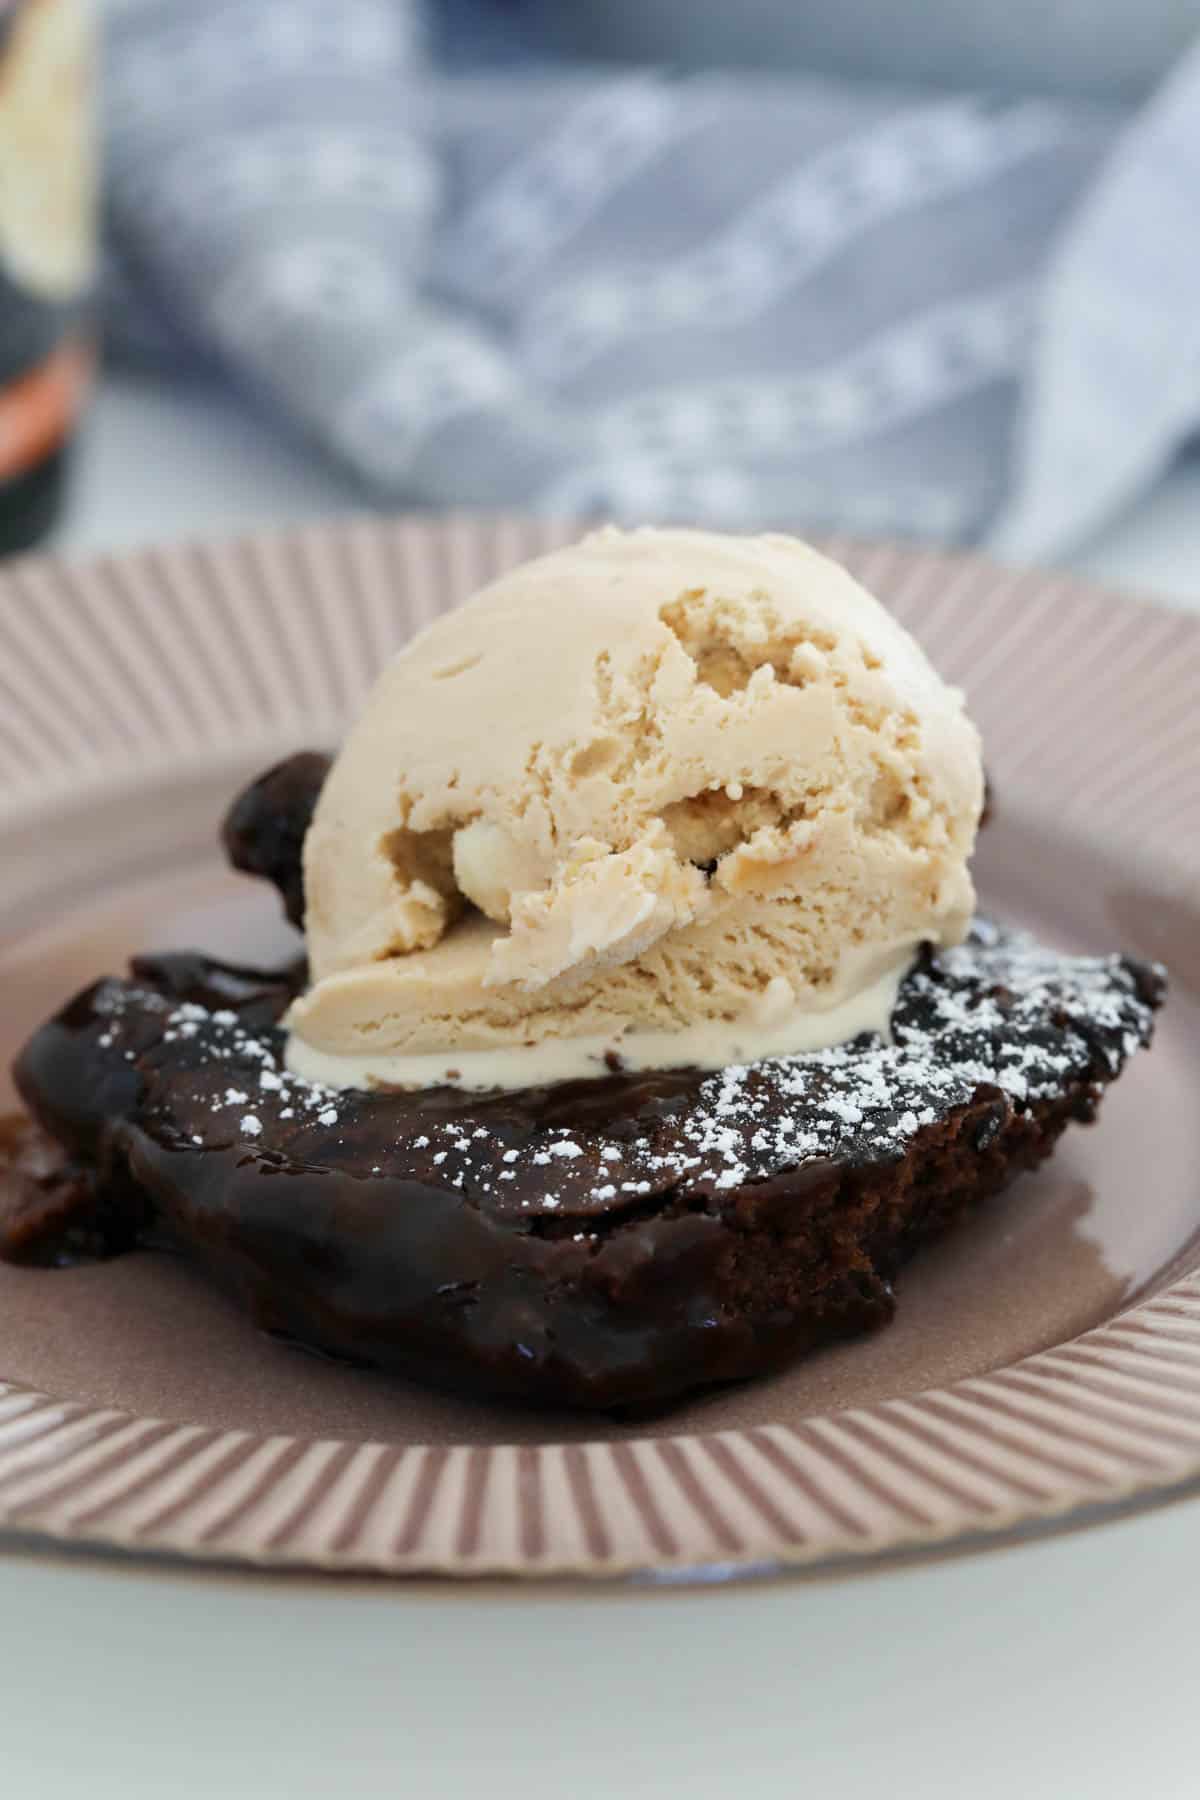 Ice cream on top of chocolate pudding.